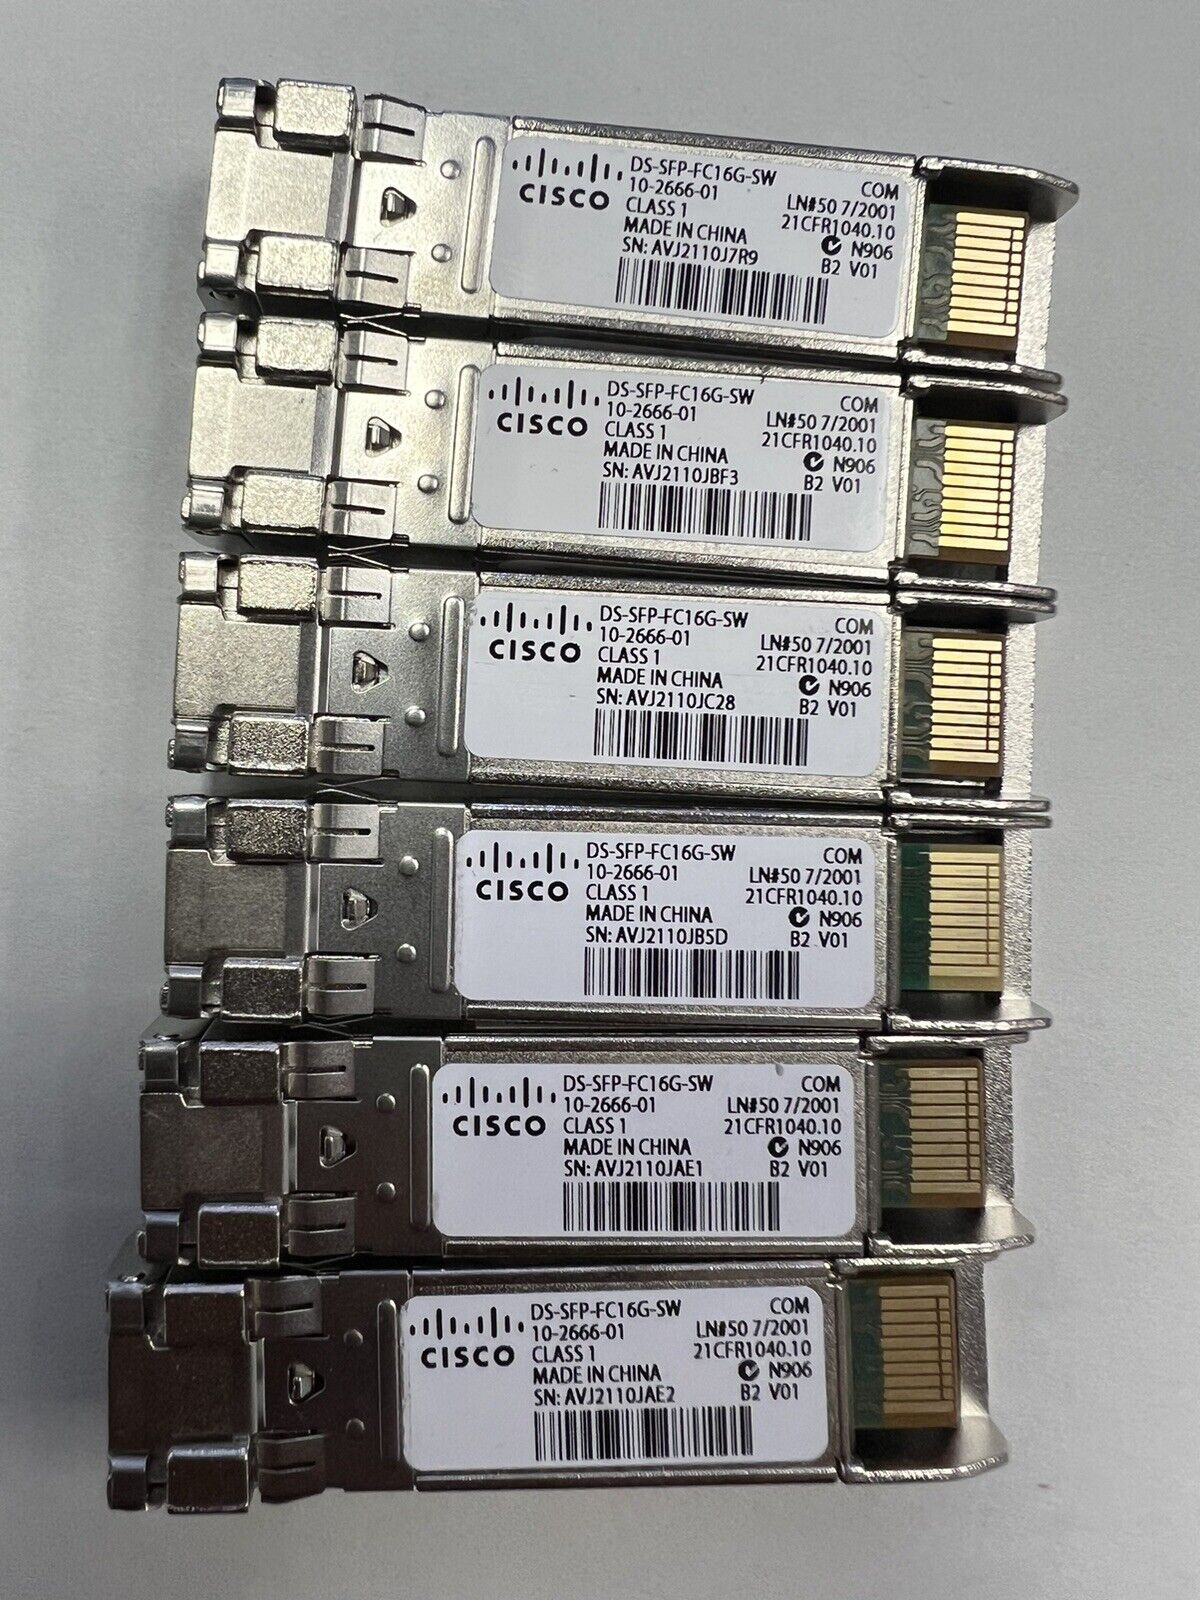 Lot of 6 Used Cisco DS-SFP-FC16G-SW 10-2666-01 850nm 16G SFP Transceiver Module